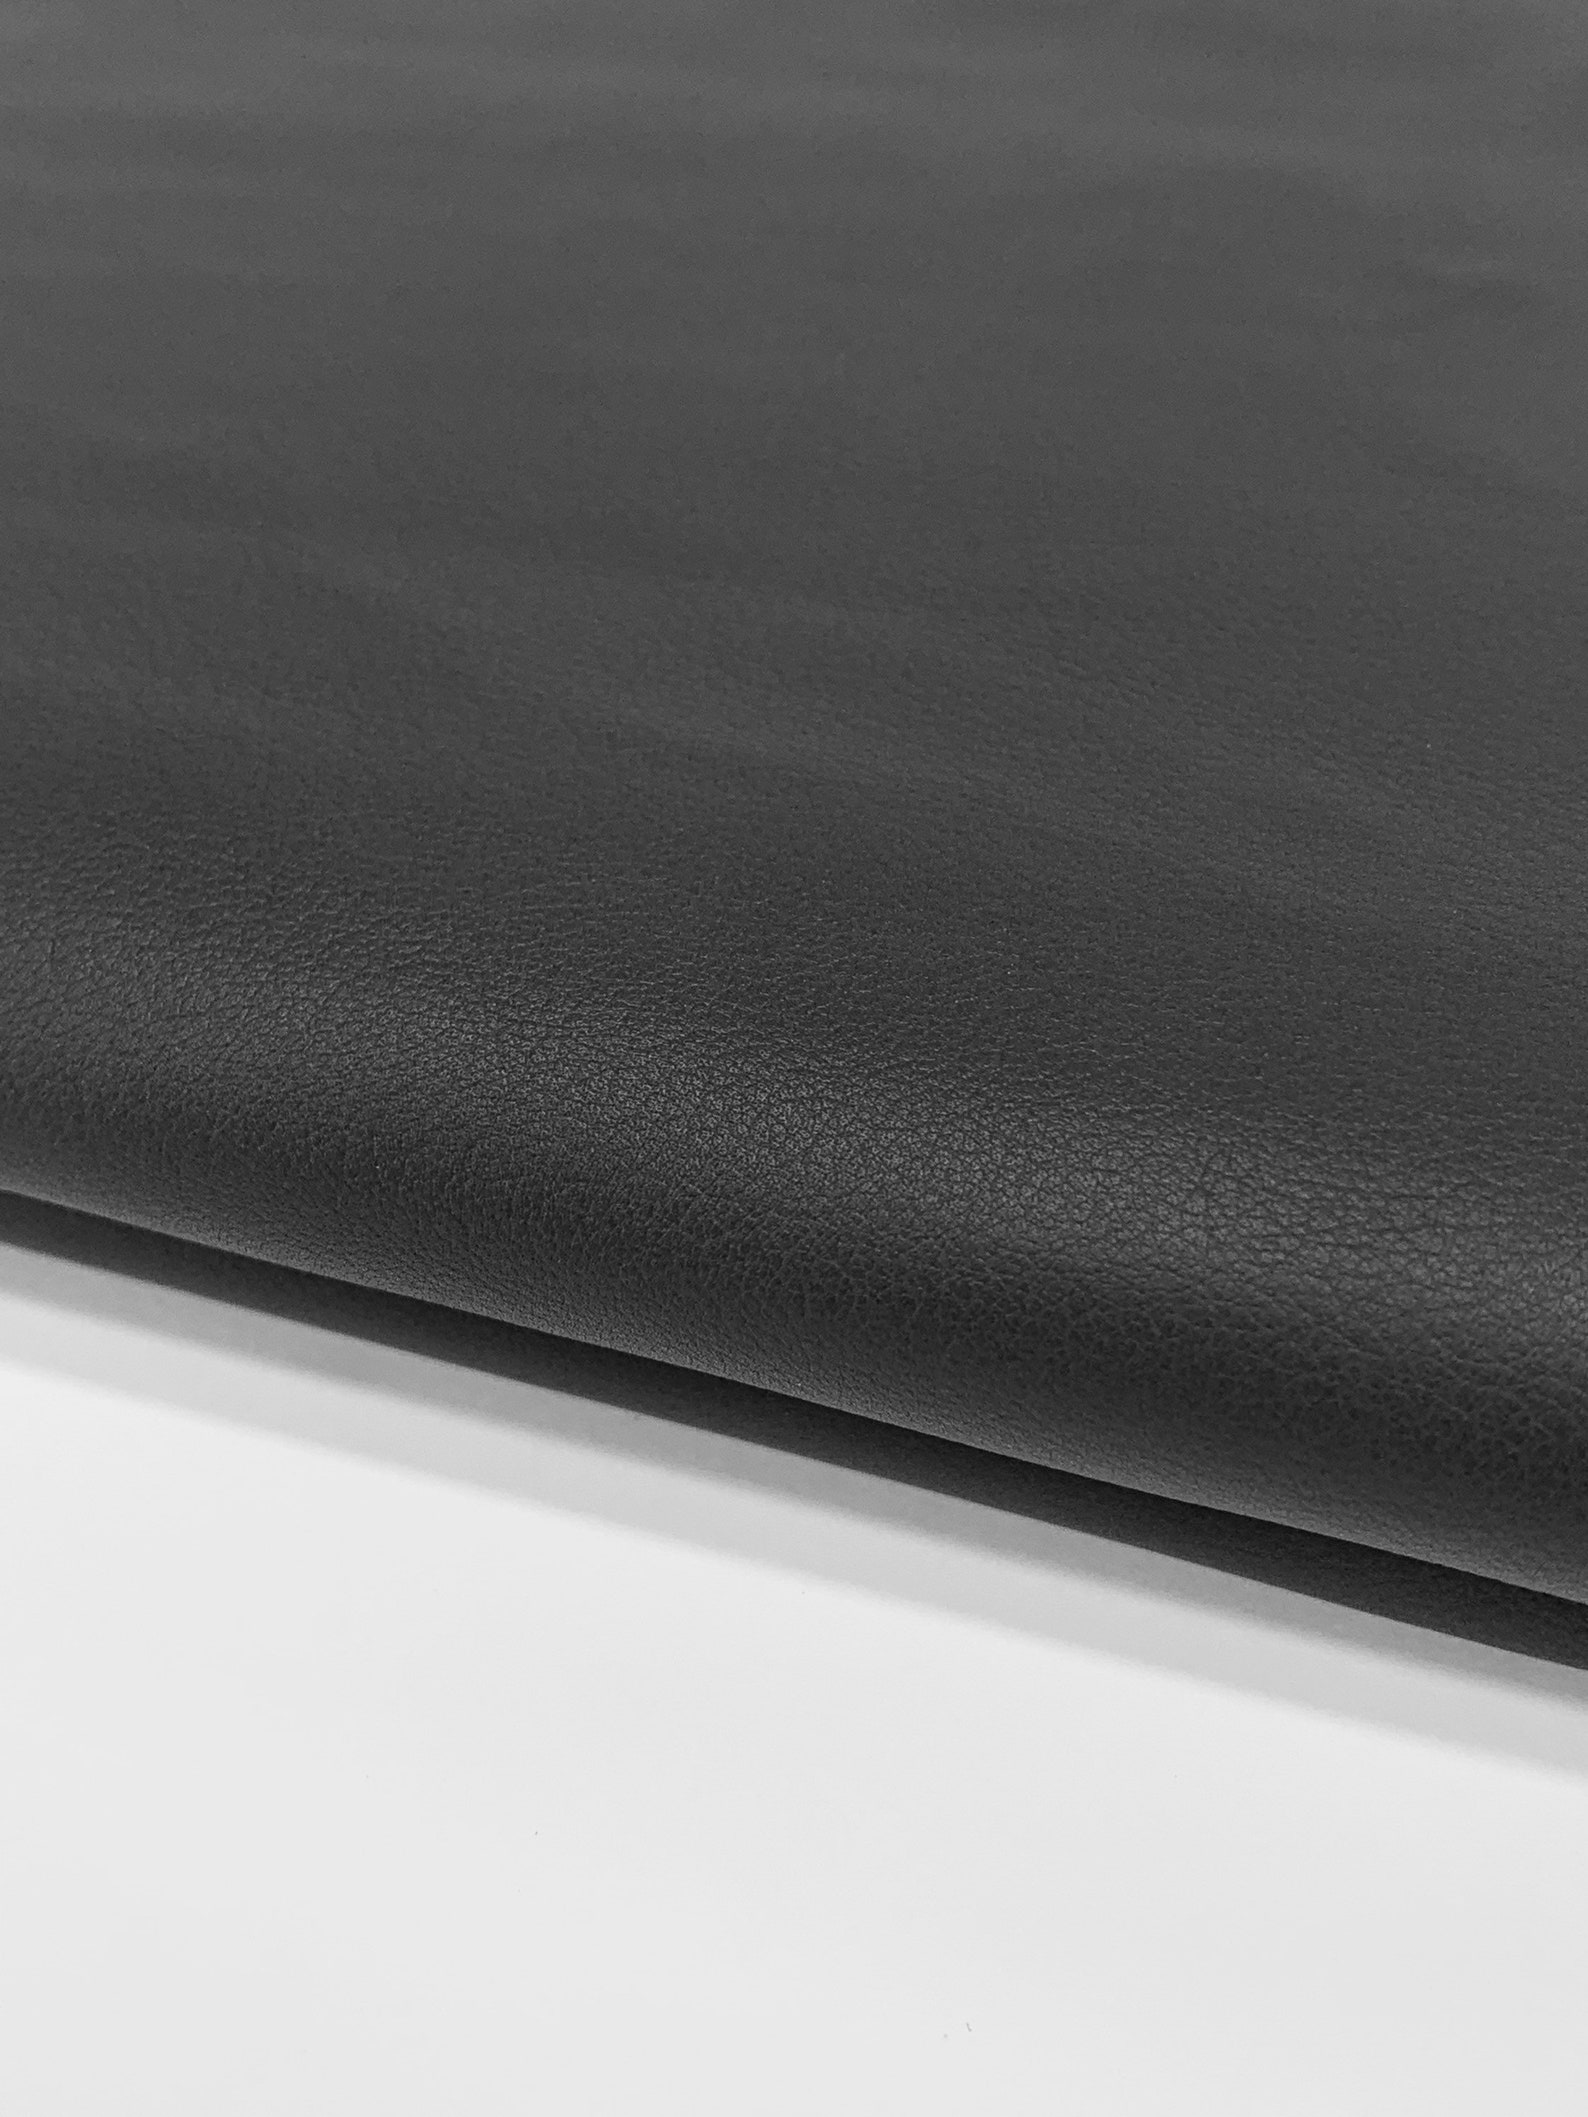 Thin Dark gray matt aniline nappa leather 0.6 mm Soft | Etsy